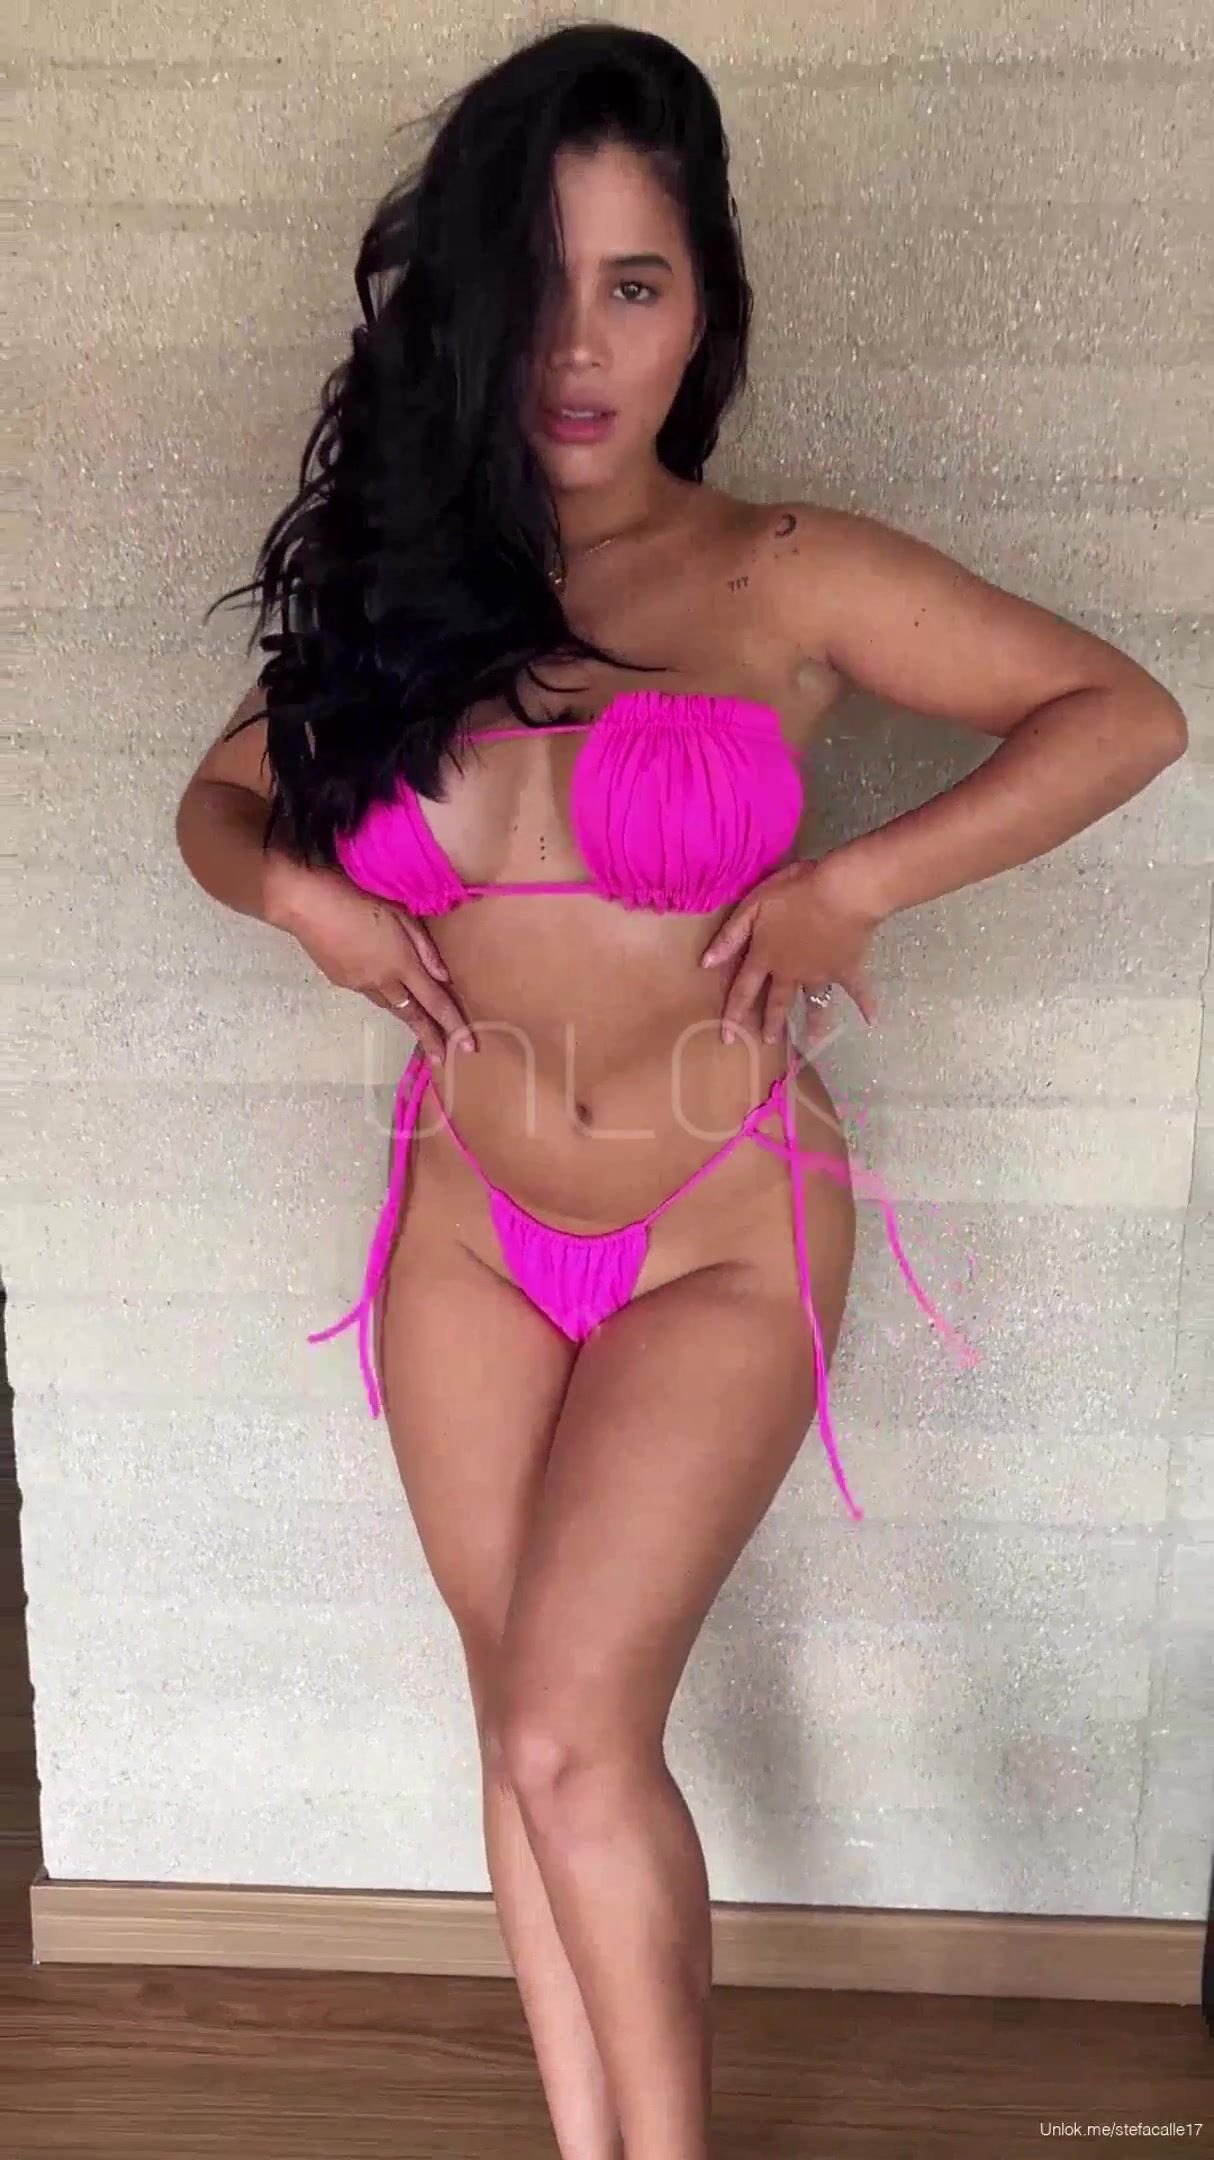 Latina in amazing bikini dances and shows titties Video